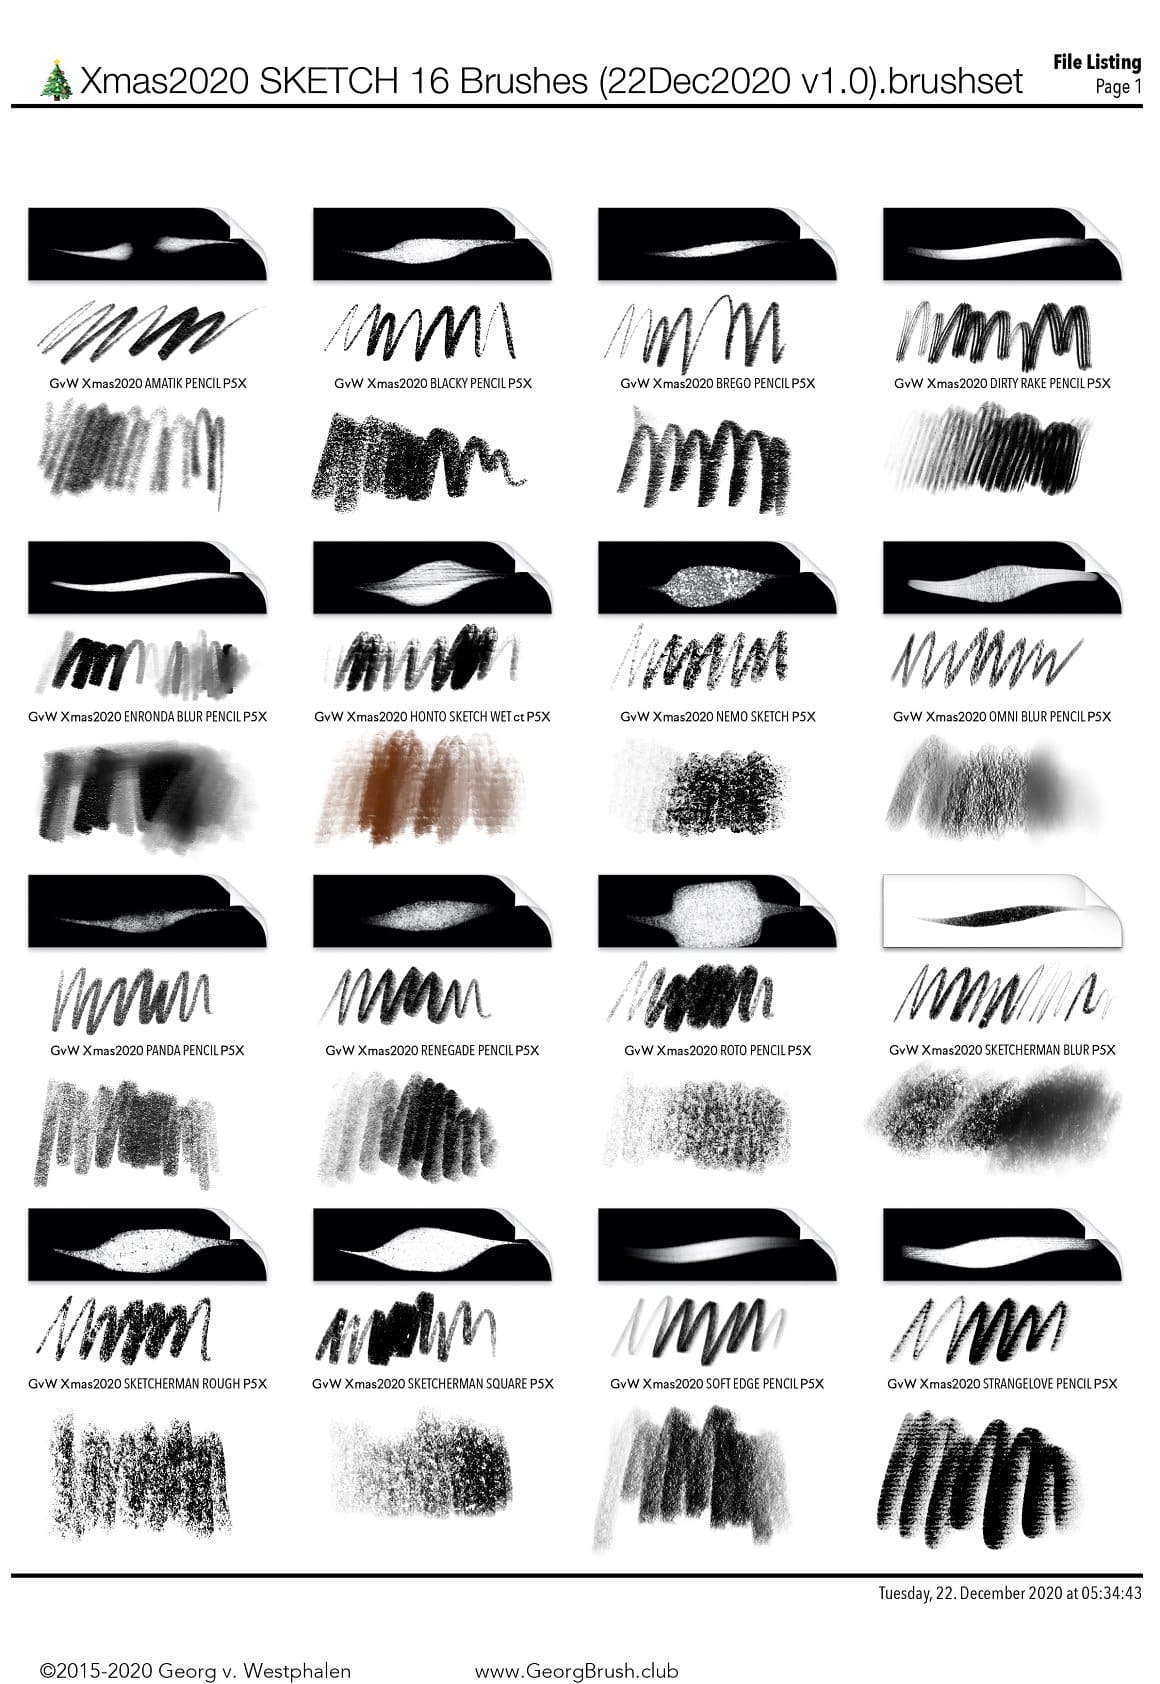 16 Brushes artwork, 1160 by 1684 pixels.